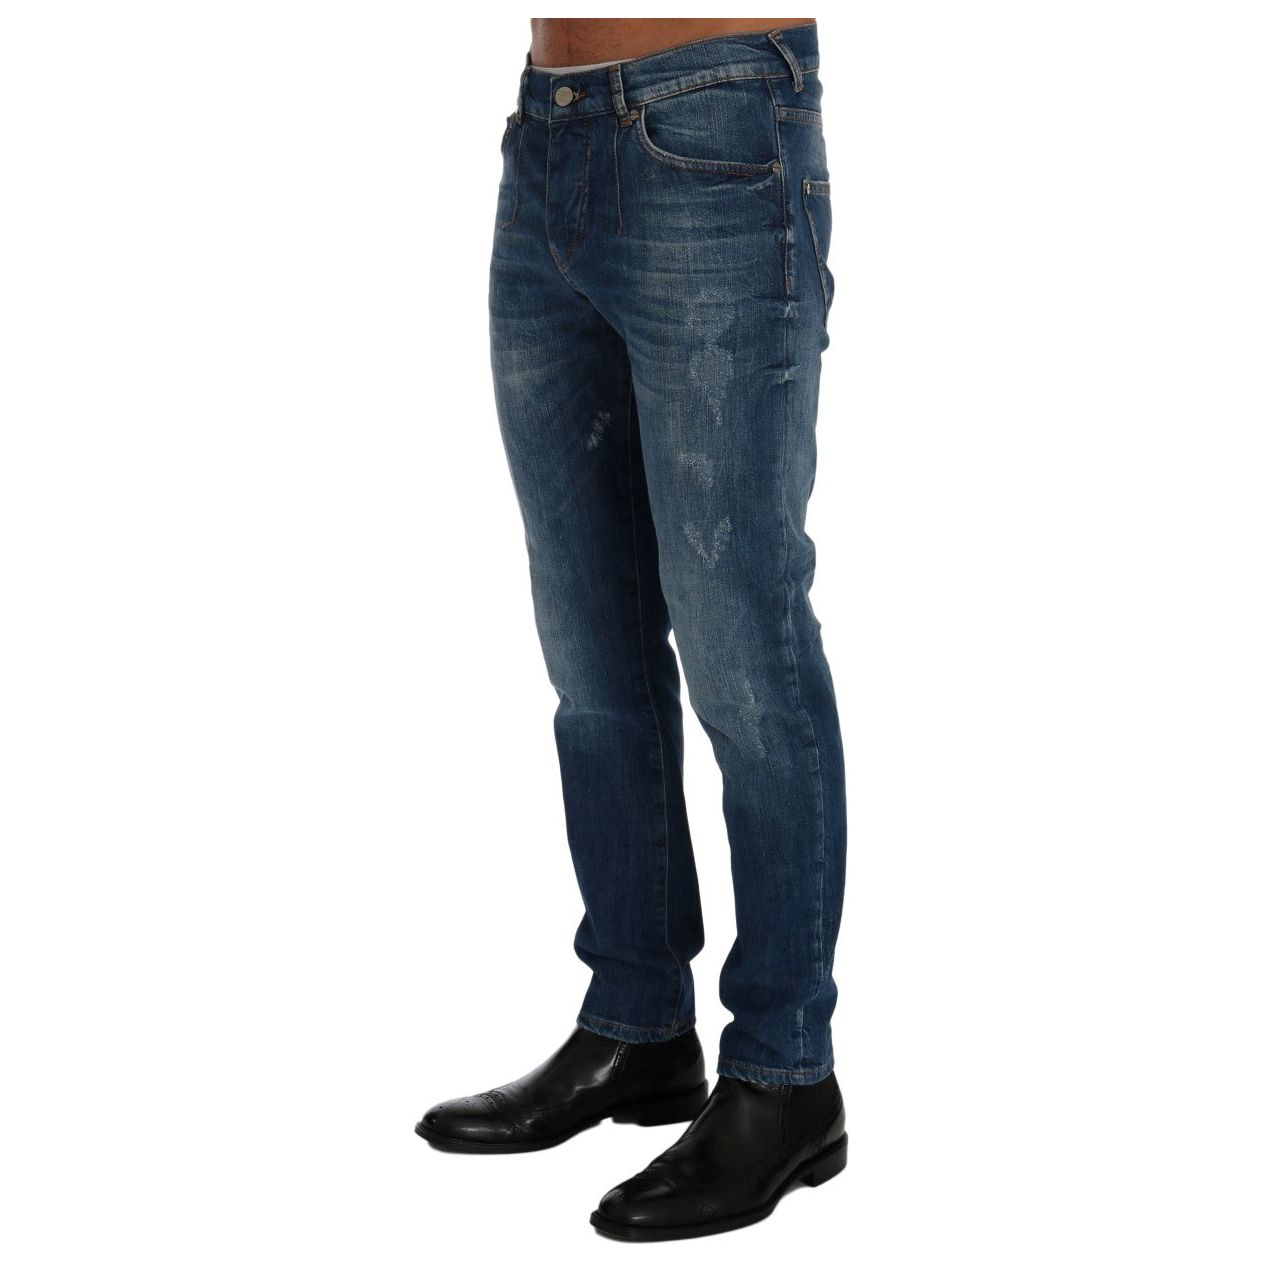 Frankie Morello Chic Slim Fit Blue Wash Jeans blue-wash-perth-slim-fit-jeans 420321-blue-wash-perth-slim-fit-jeans-1.jpg